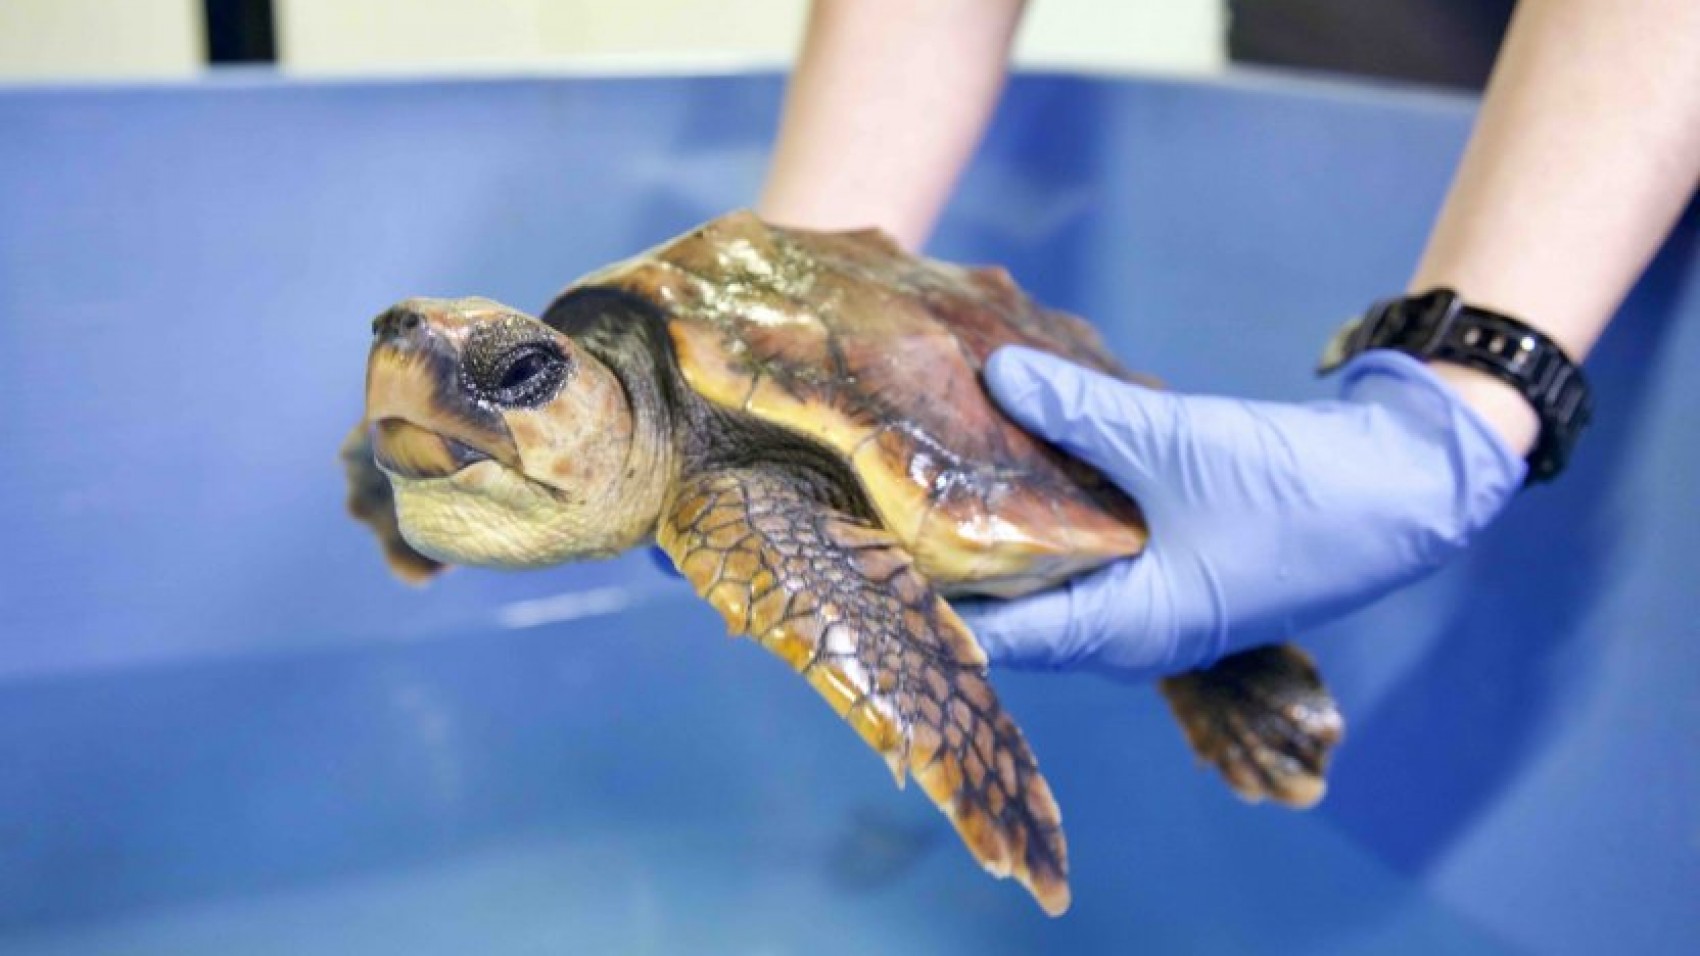 Lost and cold: a stranded sea turtle rescue mission